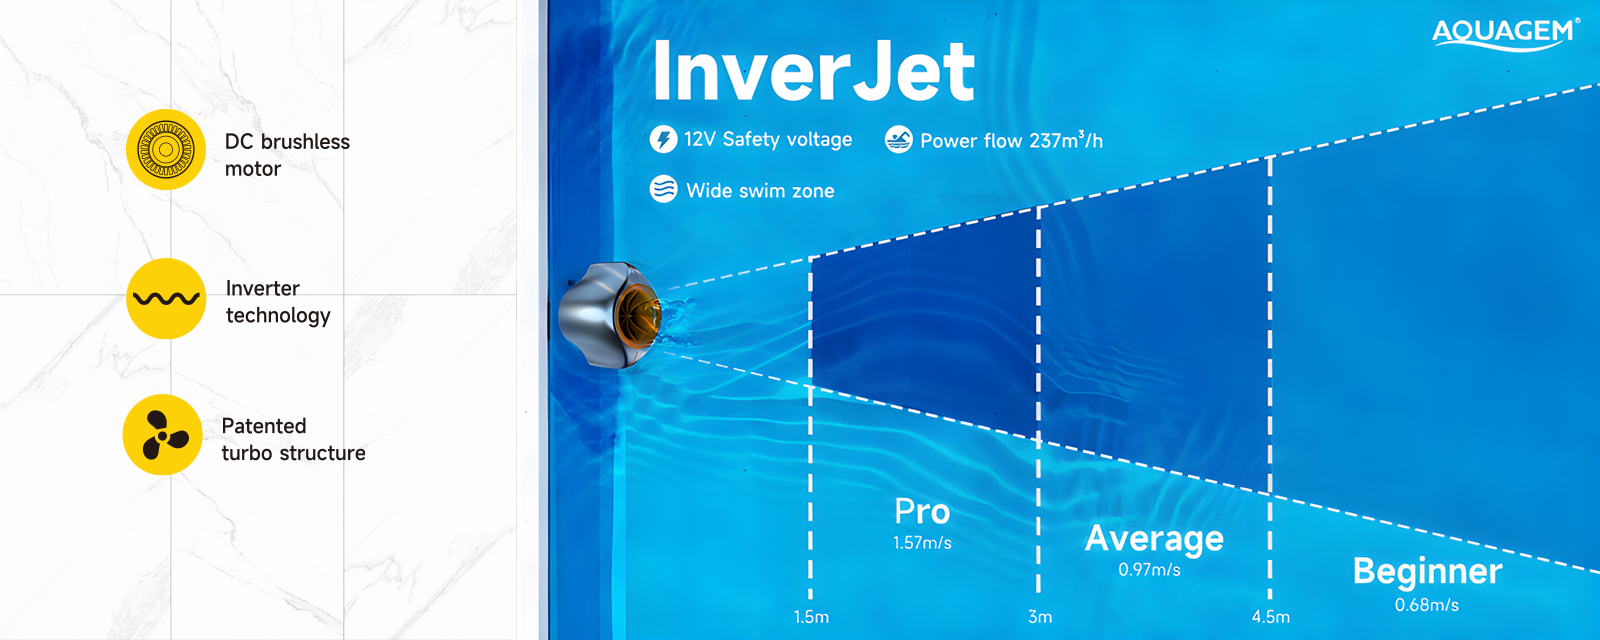 Машина для плавания inverjet - Мощный расход: Макс. 237 м³/ч